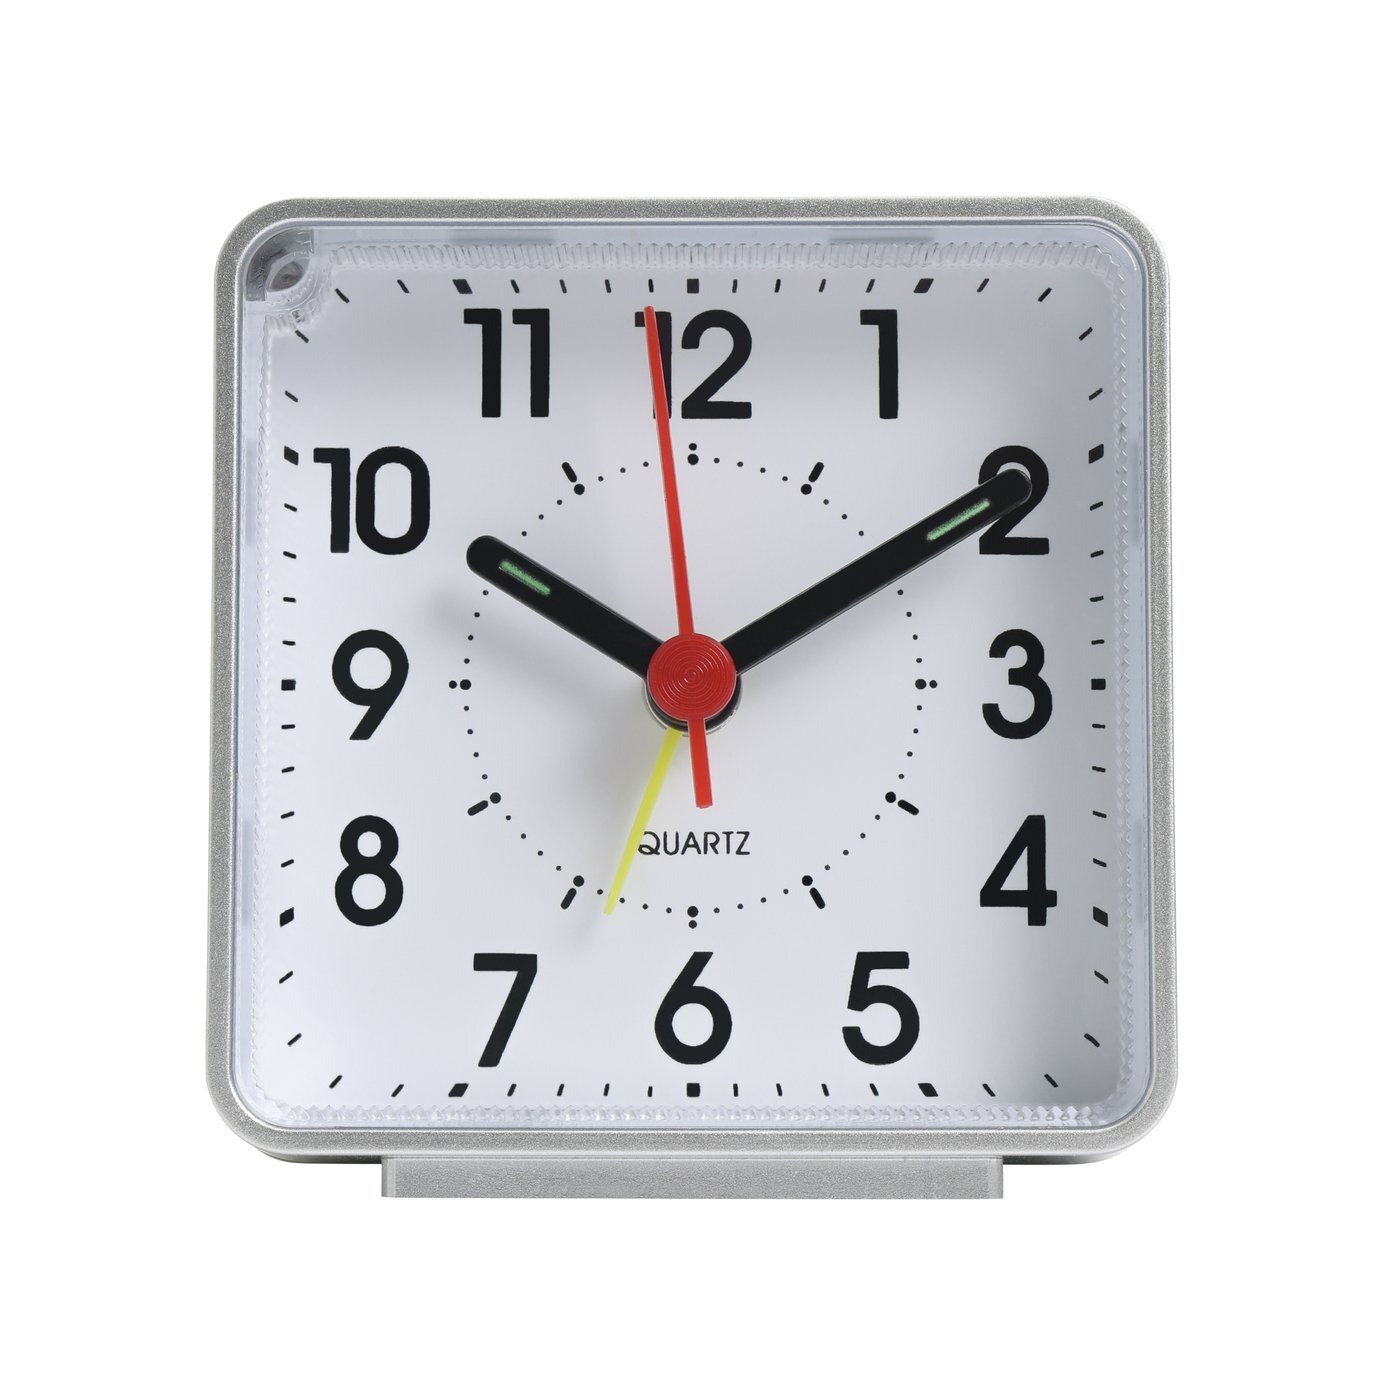 Habitat Square Analogue Alarm Clock - Silver - image 1